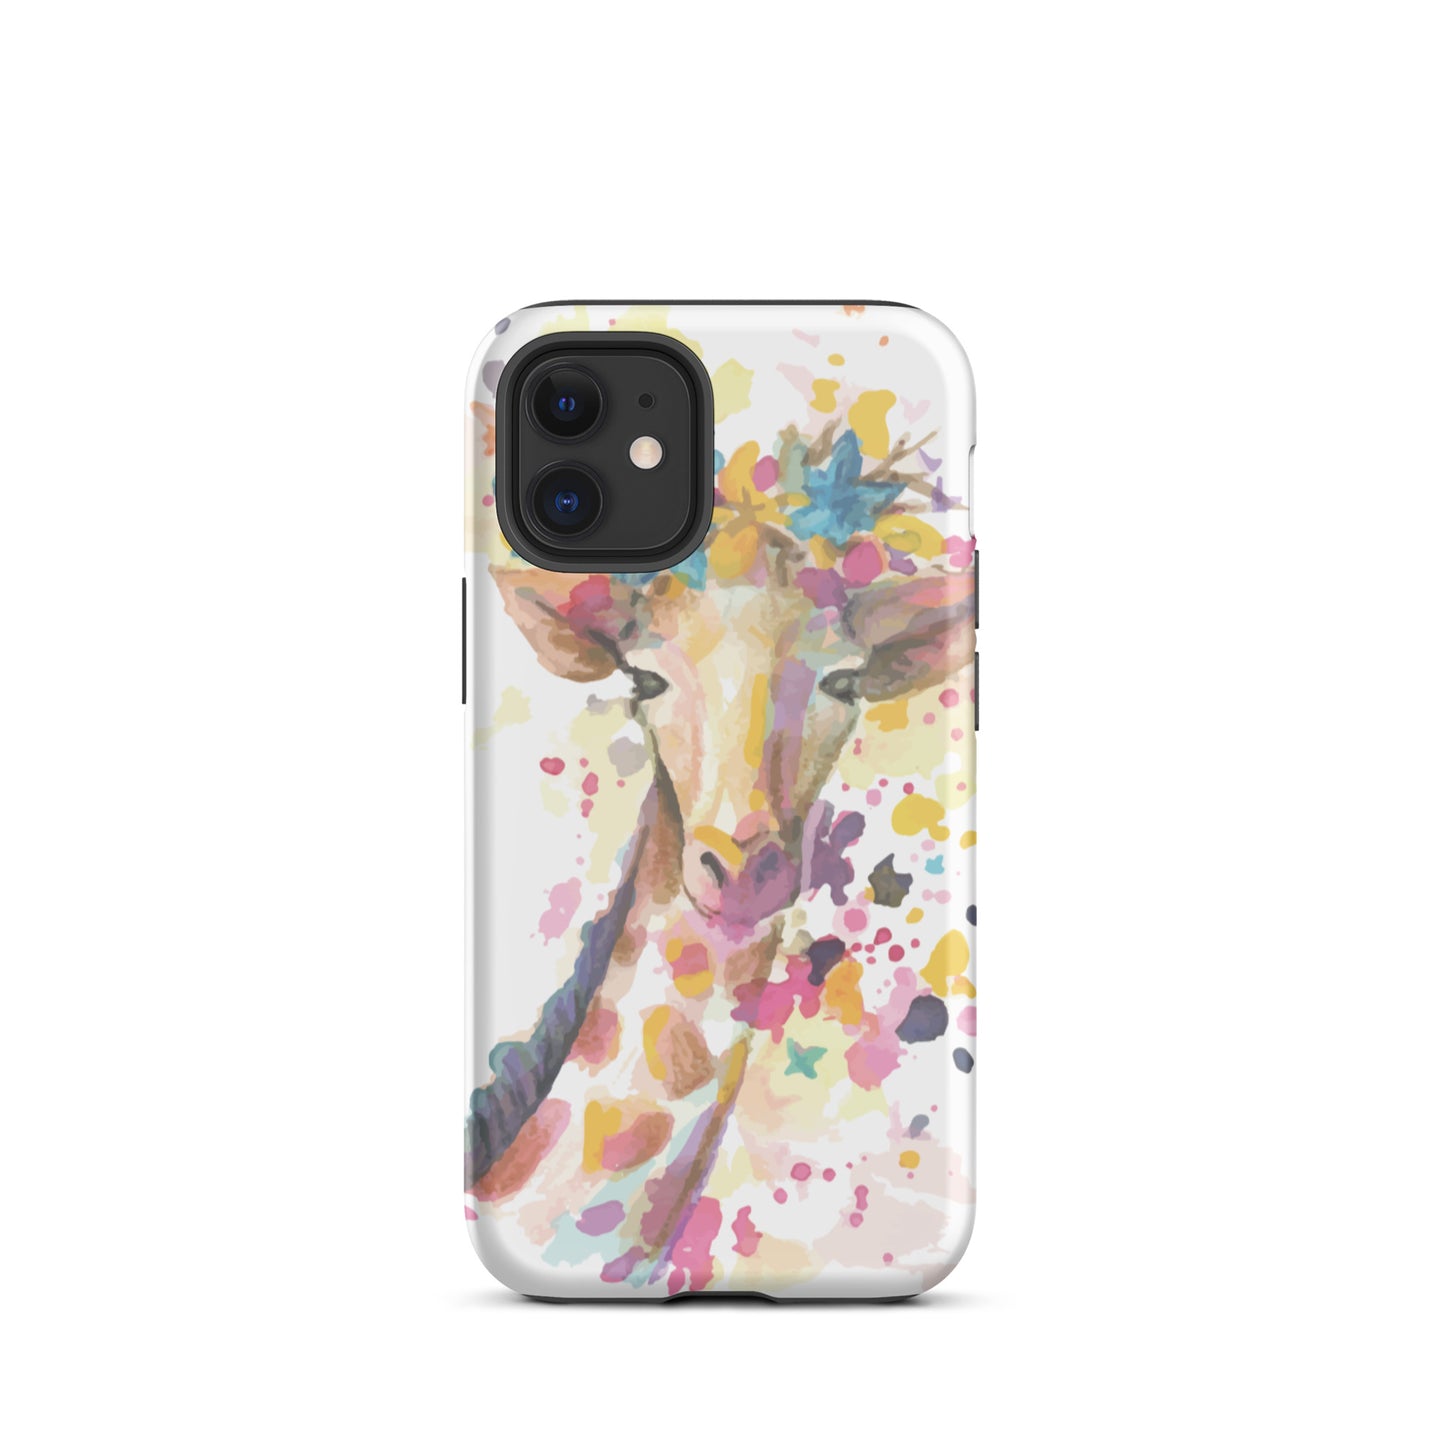 Giraffe Tough iPhone case